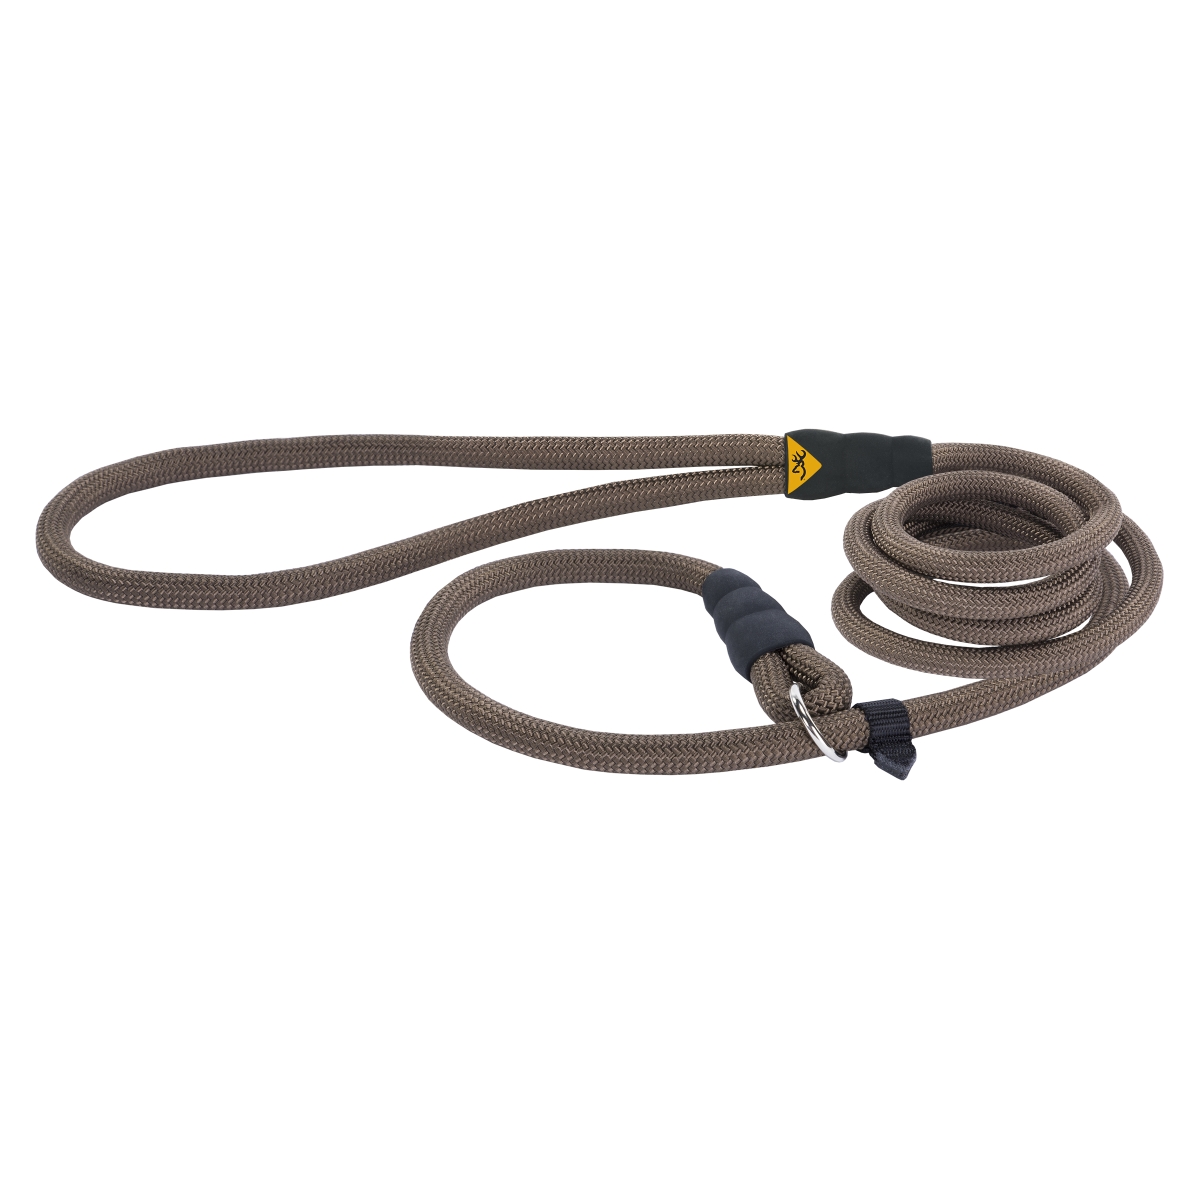 P000014120199 6 Ft. Rope Slip Lead Dog Leashes - Teak Brown